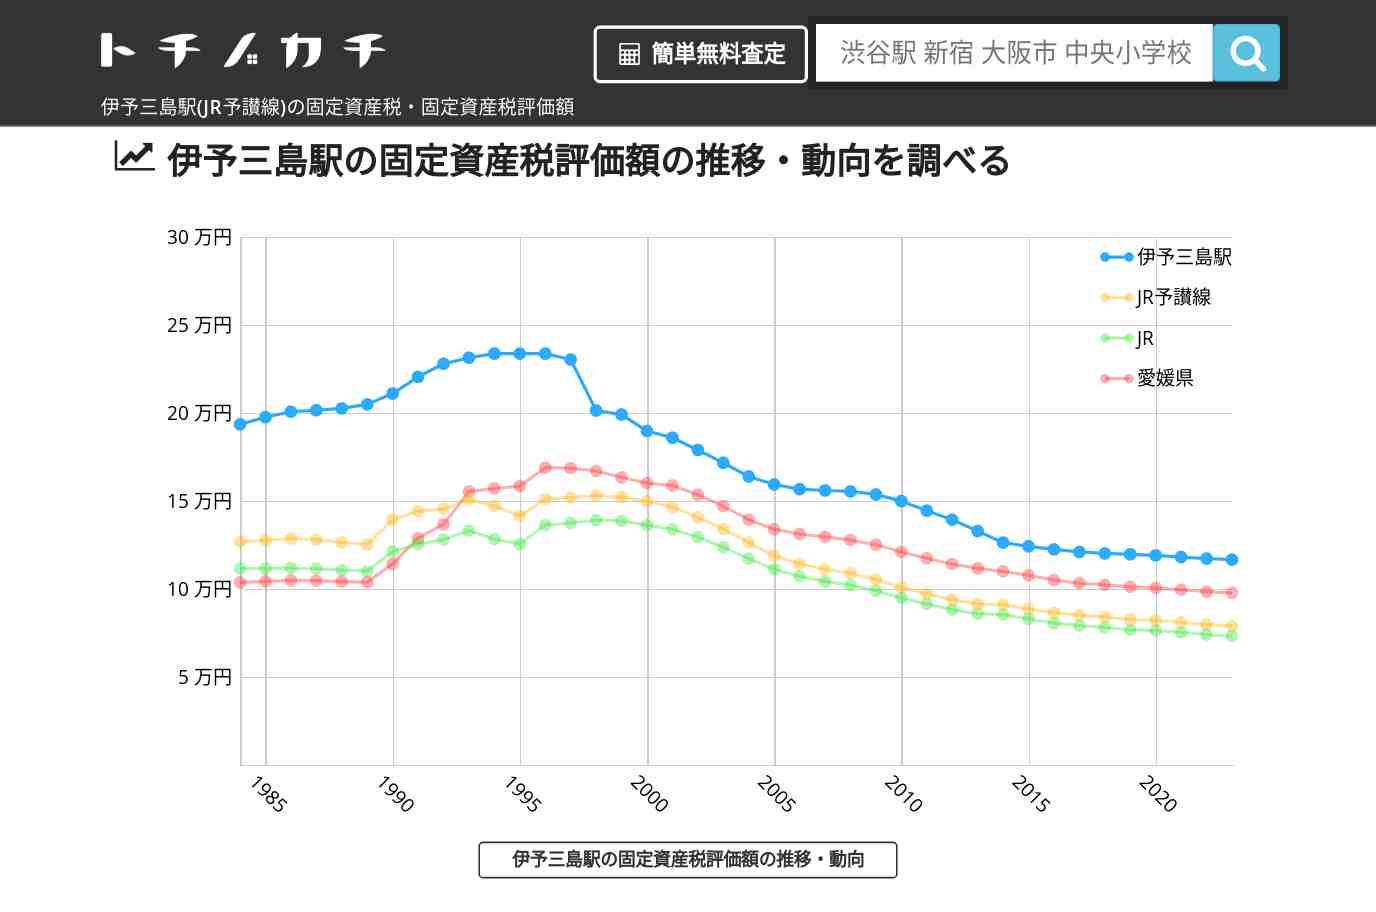 伊予三島駅(JR予讃線)の固定資産税・固定資産税評価額 | トチノカチ